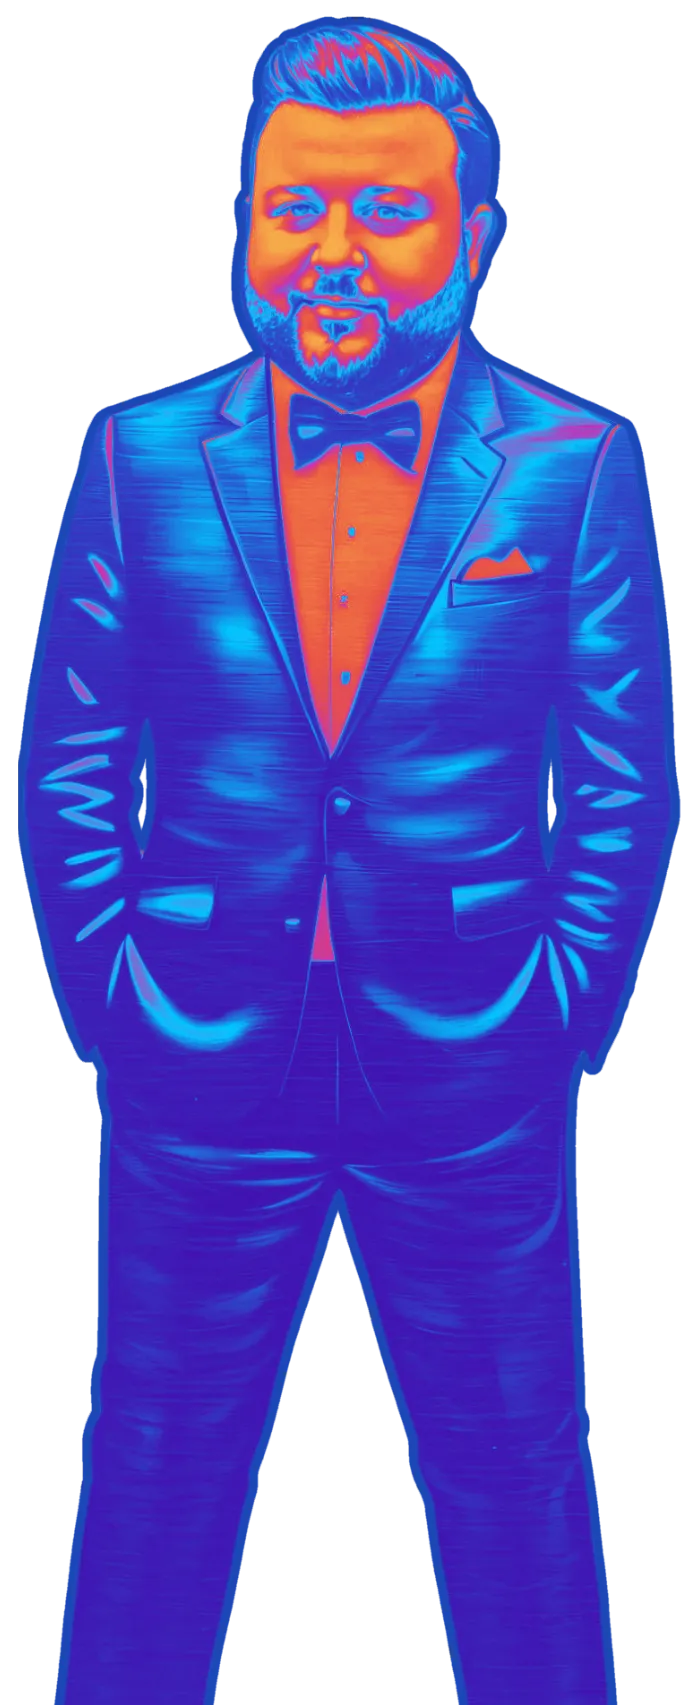 Adam Johnstone in a trippy suit